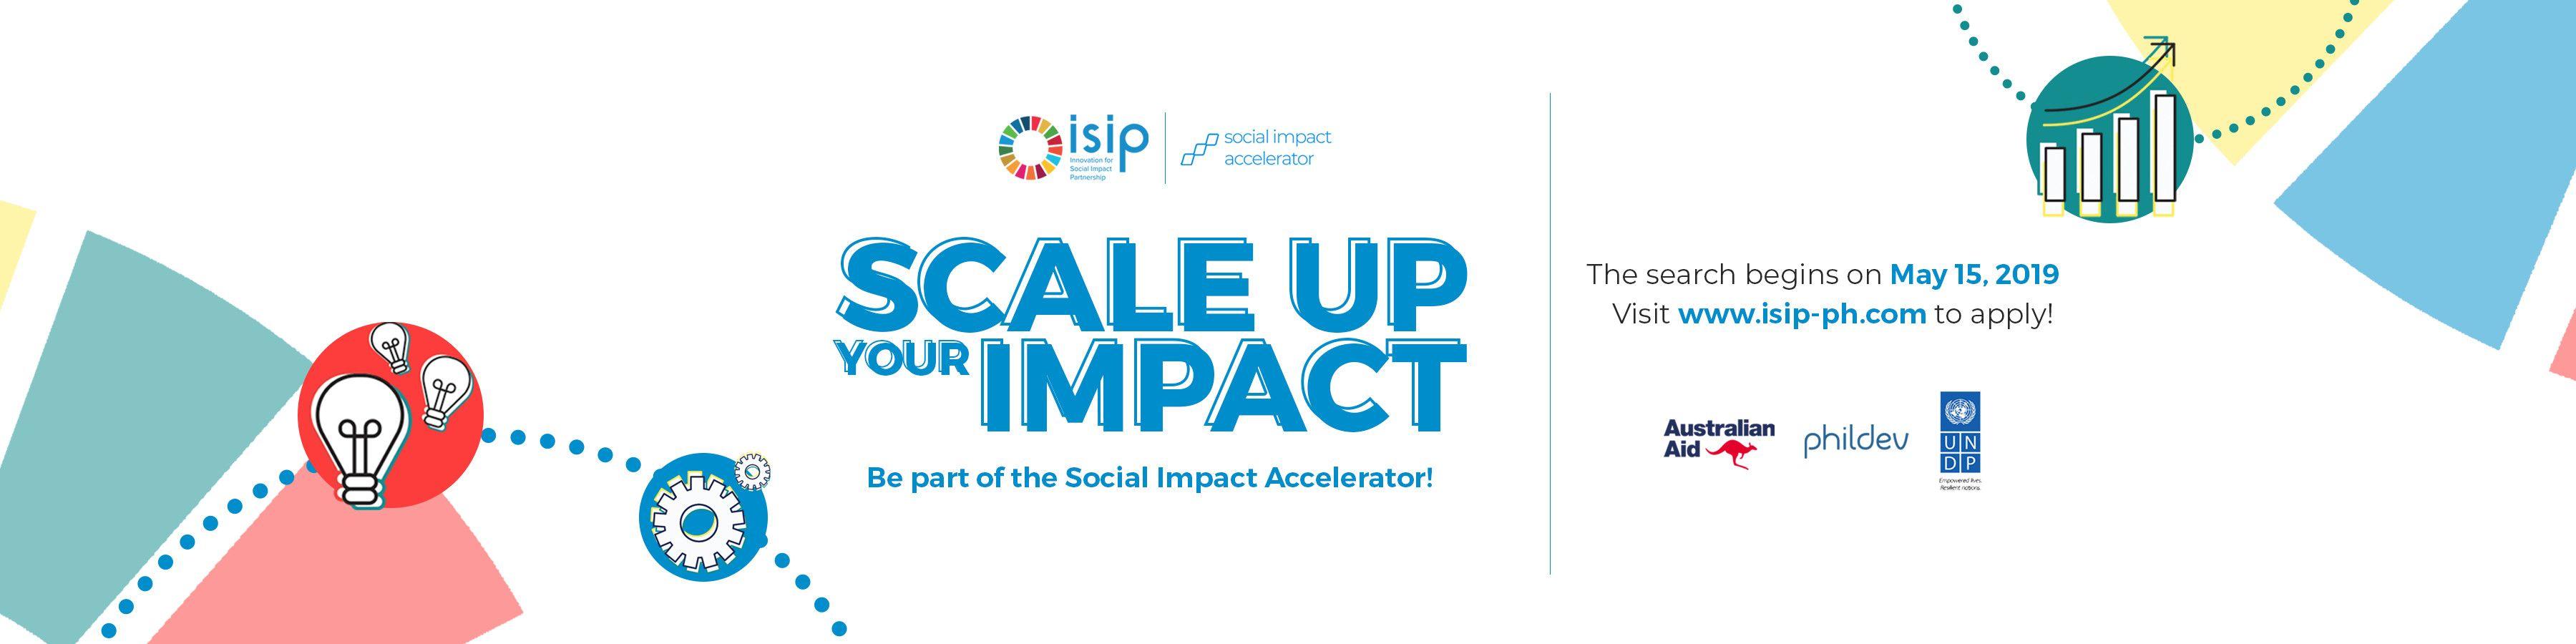 Isip Logo - Innovation for Social Impact Partnership (ISIP) | LinkedIn